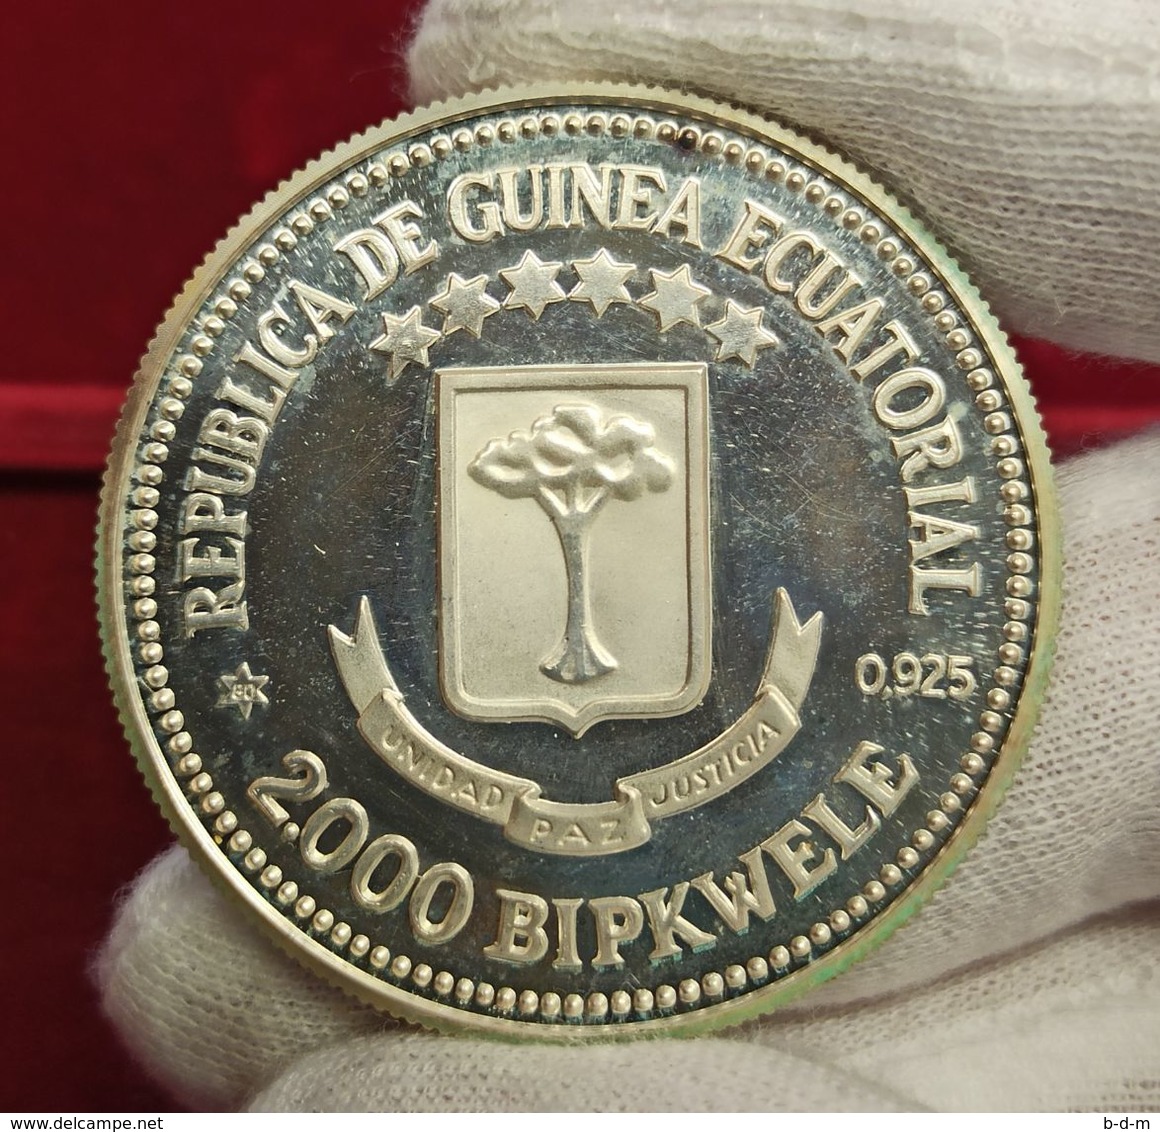 Guinea Ecuatorial 2000 Bipkwele Visita De Los Reyes 1979 X# 2 Plata Proof - Guinea Ecuatorial